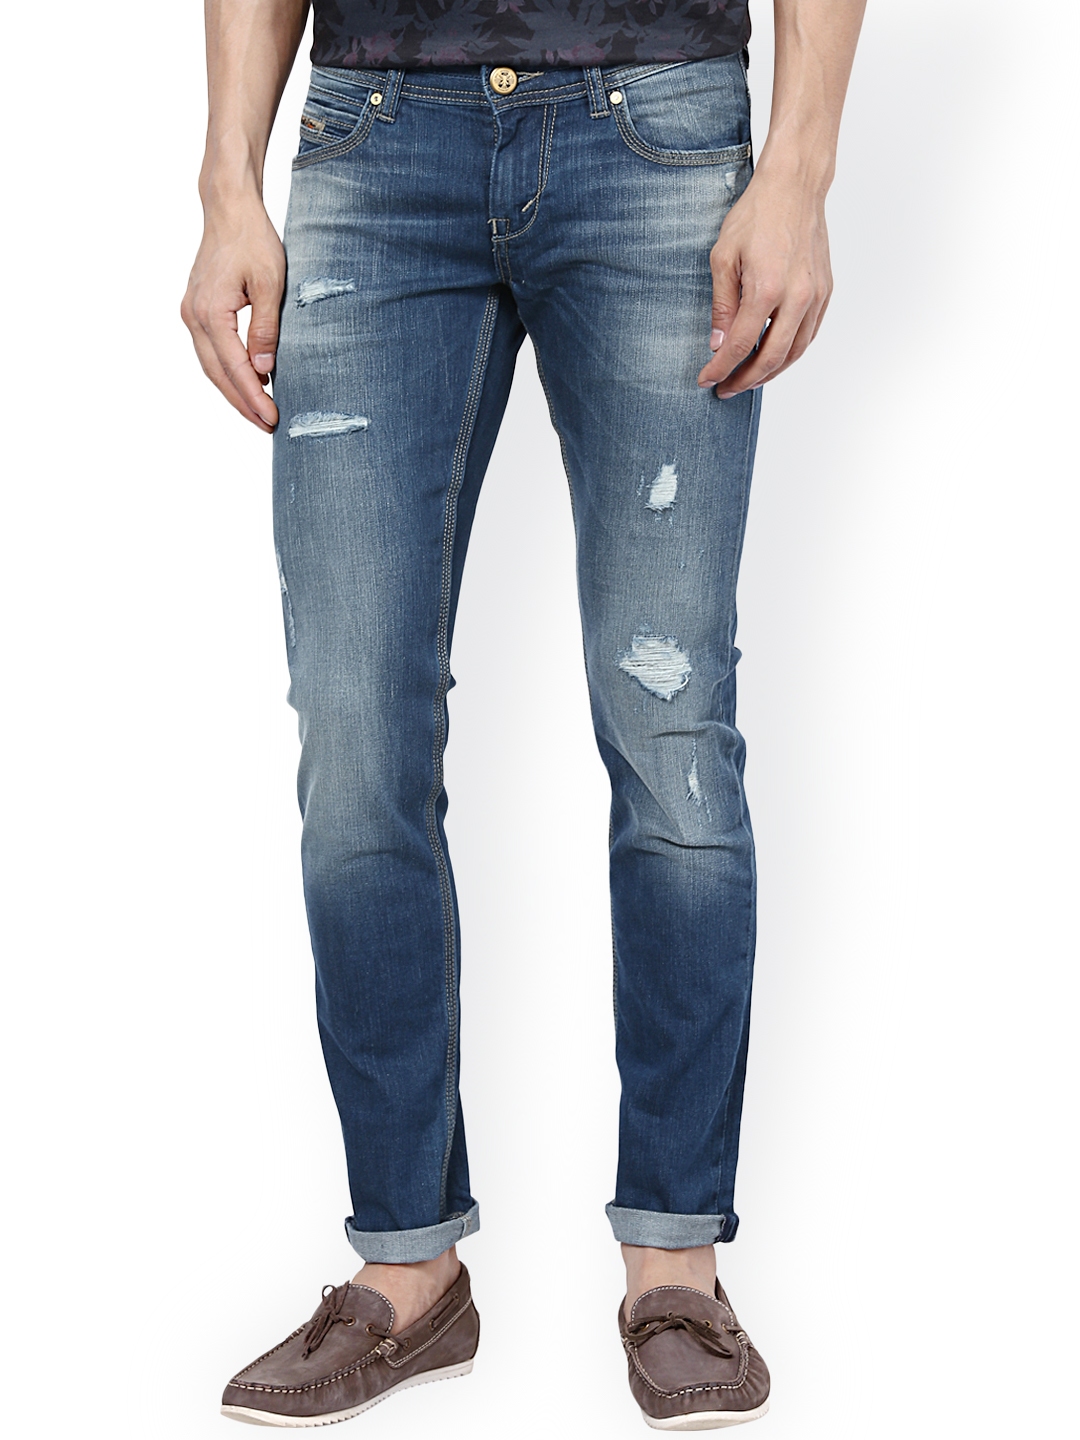 rookies jeans myntra